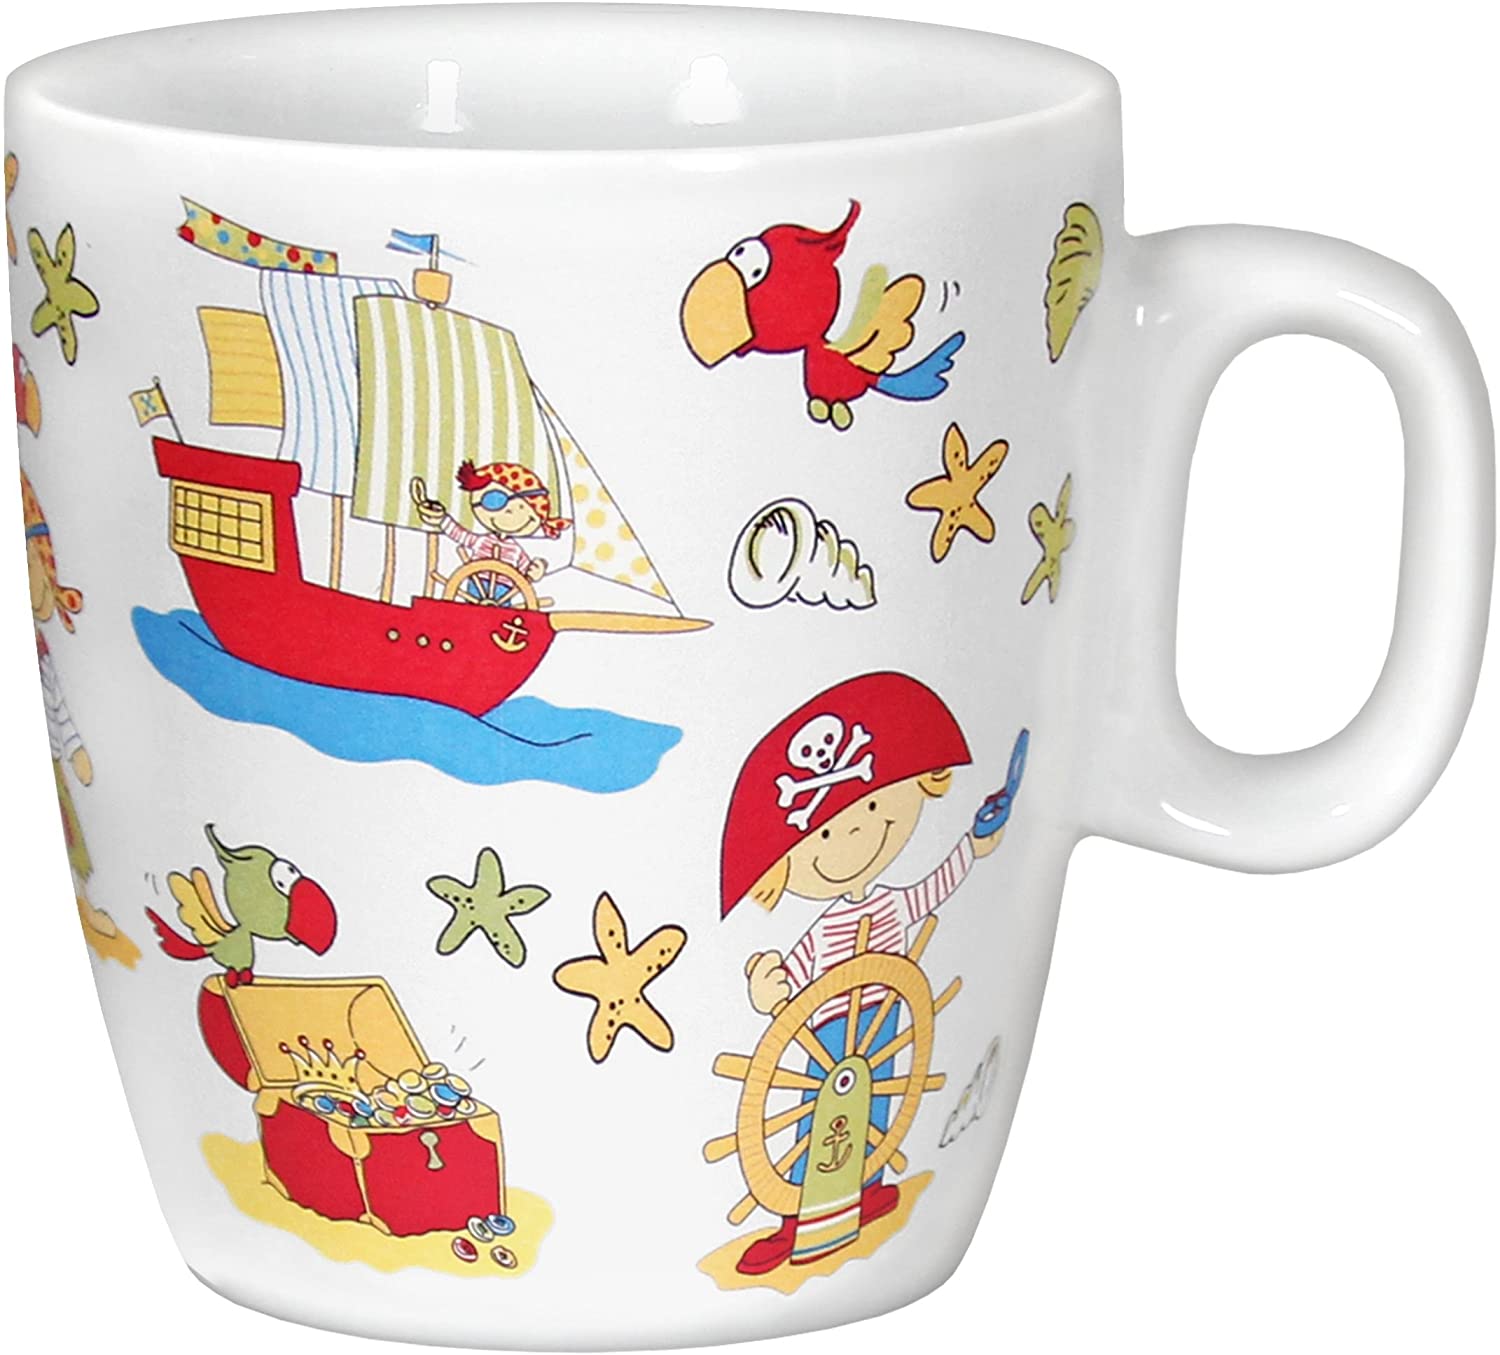 Porzellan- Kindertasse, Becher, Tasse - Pirat- maritim - deutsches Produktdesign